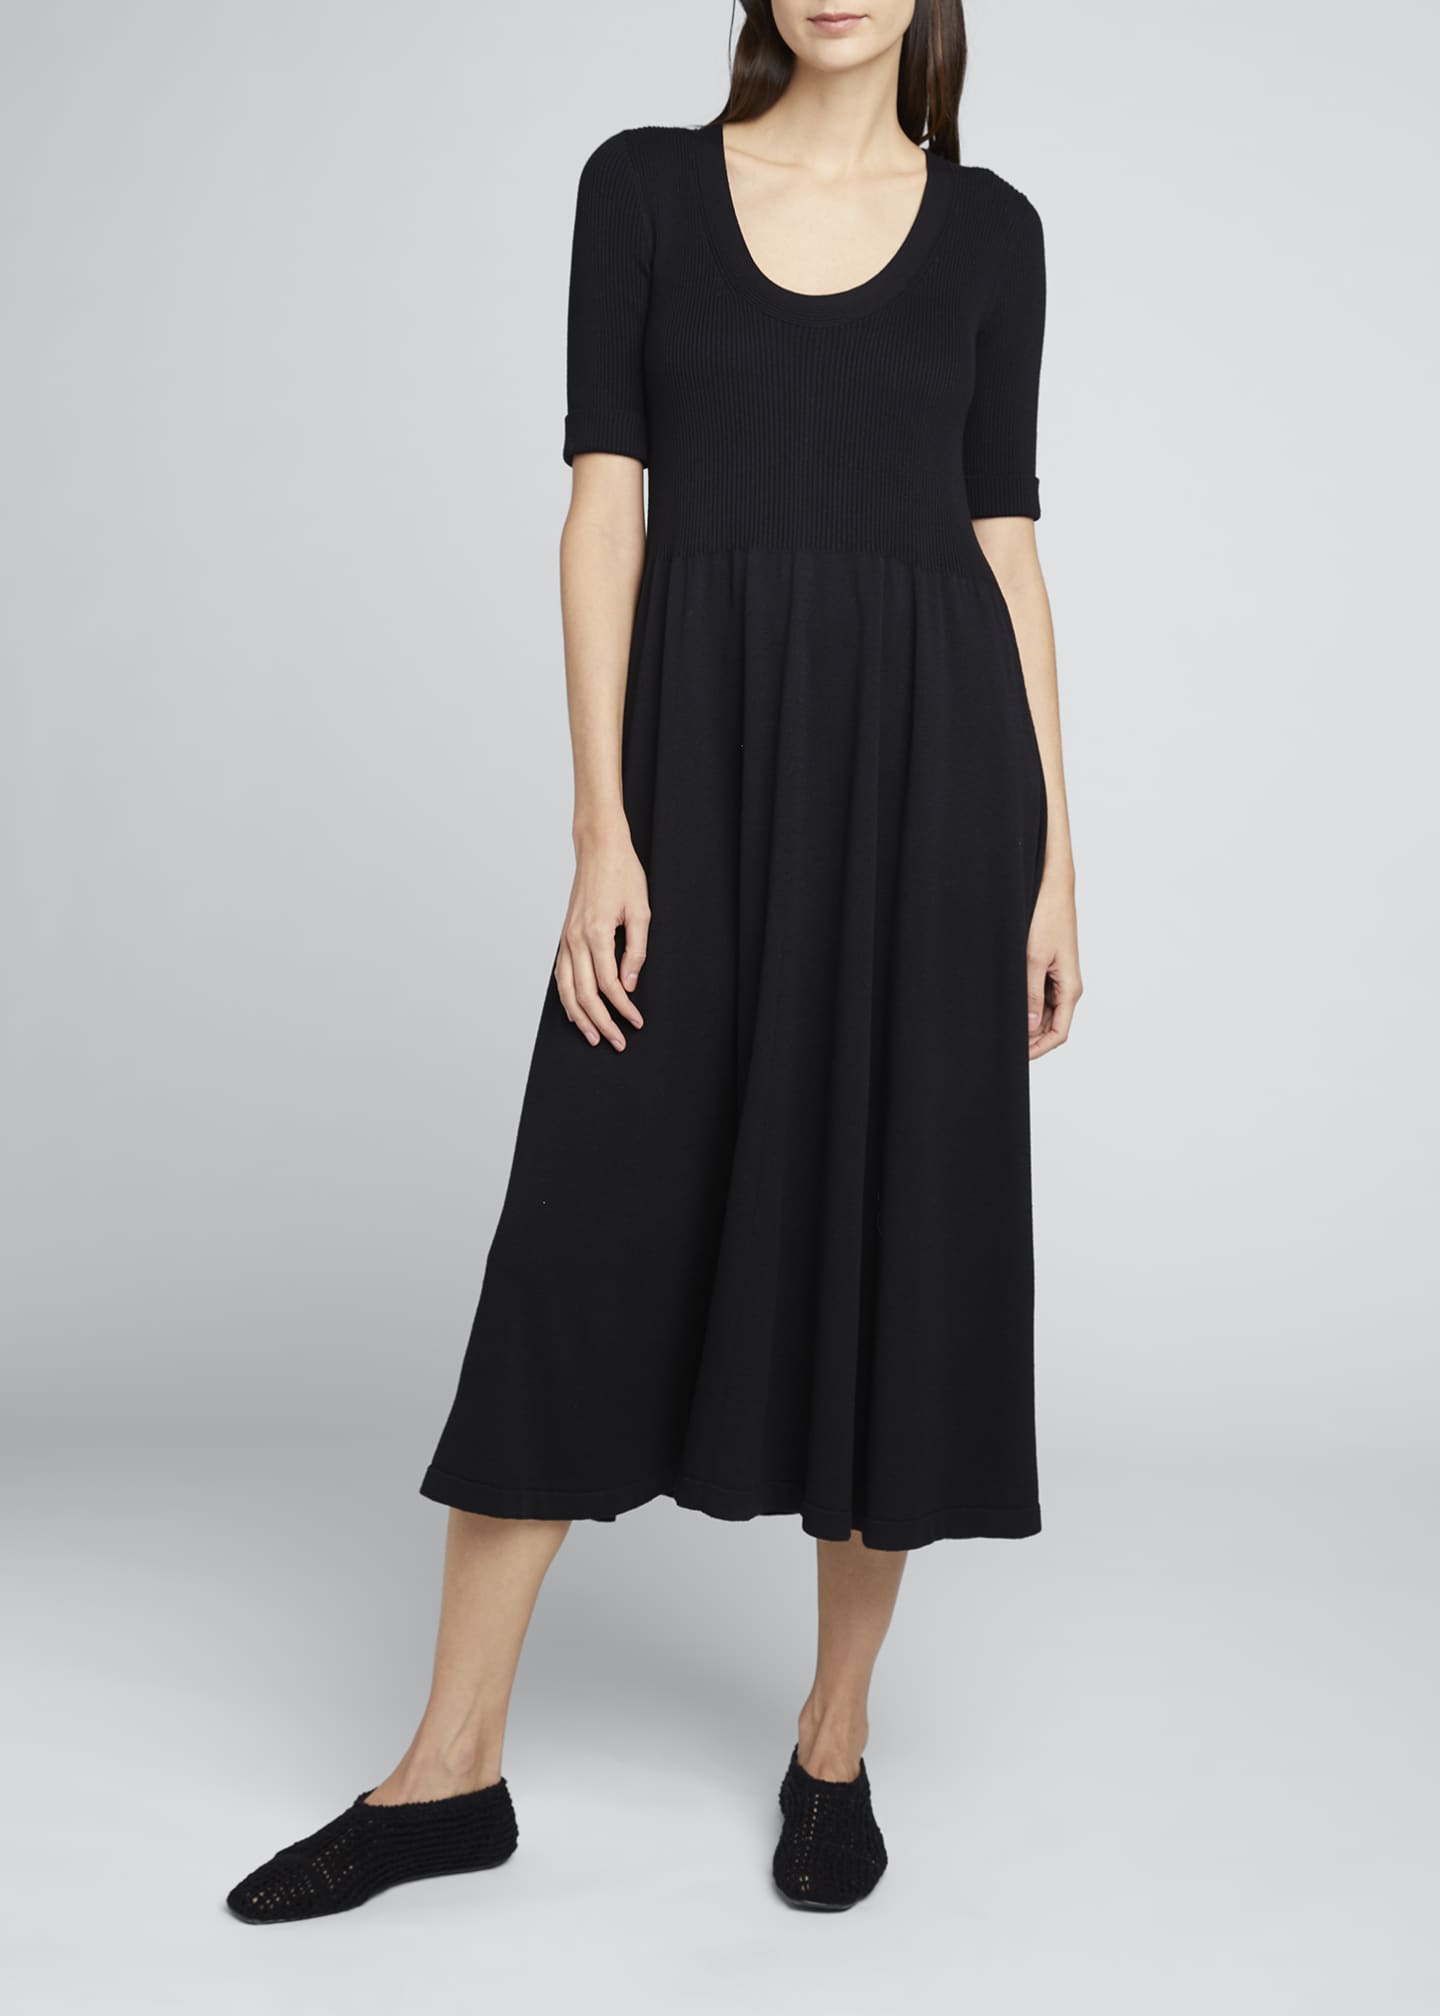 THE ROW Zakaria Jersey 3/4-Sleeve Dress - Bergdorf Goodman